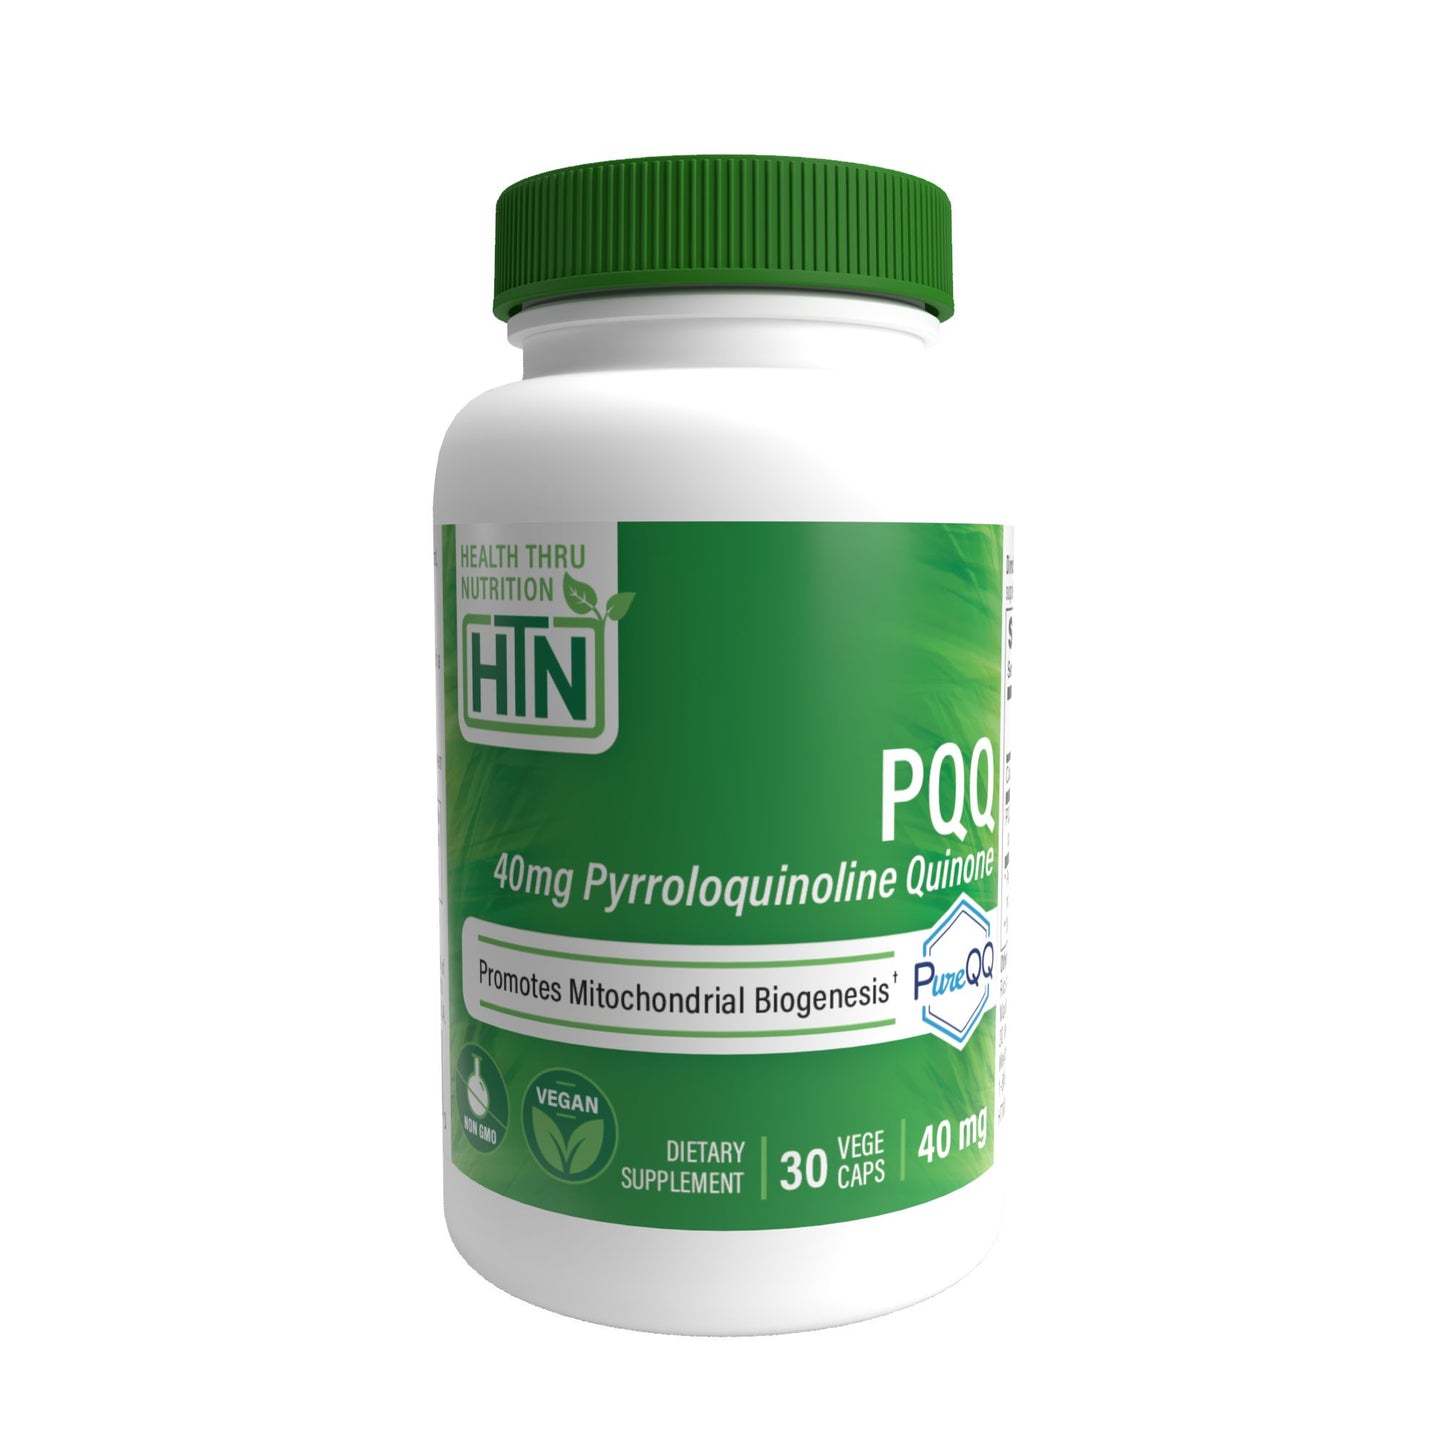 Health Thru Nutrition PQQ Pyrroloquinoline Quinone (as PureQQ™) 40mg (NON-GMO) 30 Vegecaps Promotes Mitochondrial Biogenesis